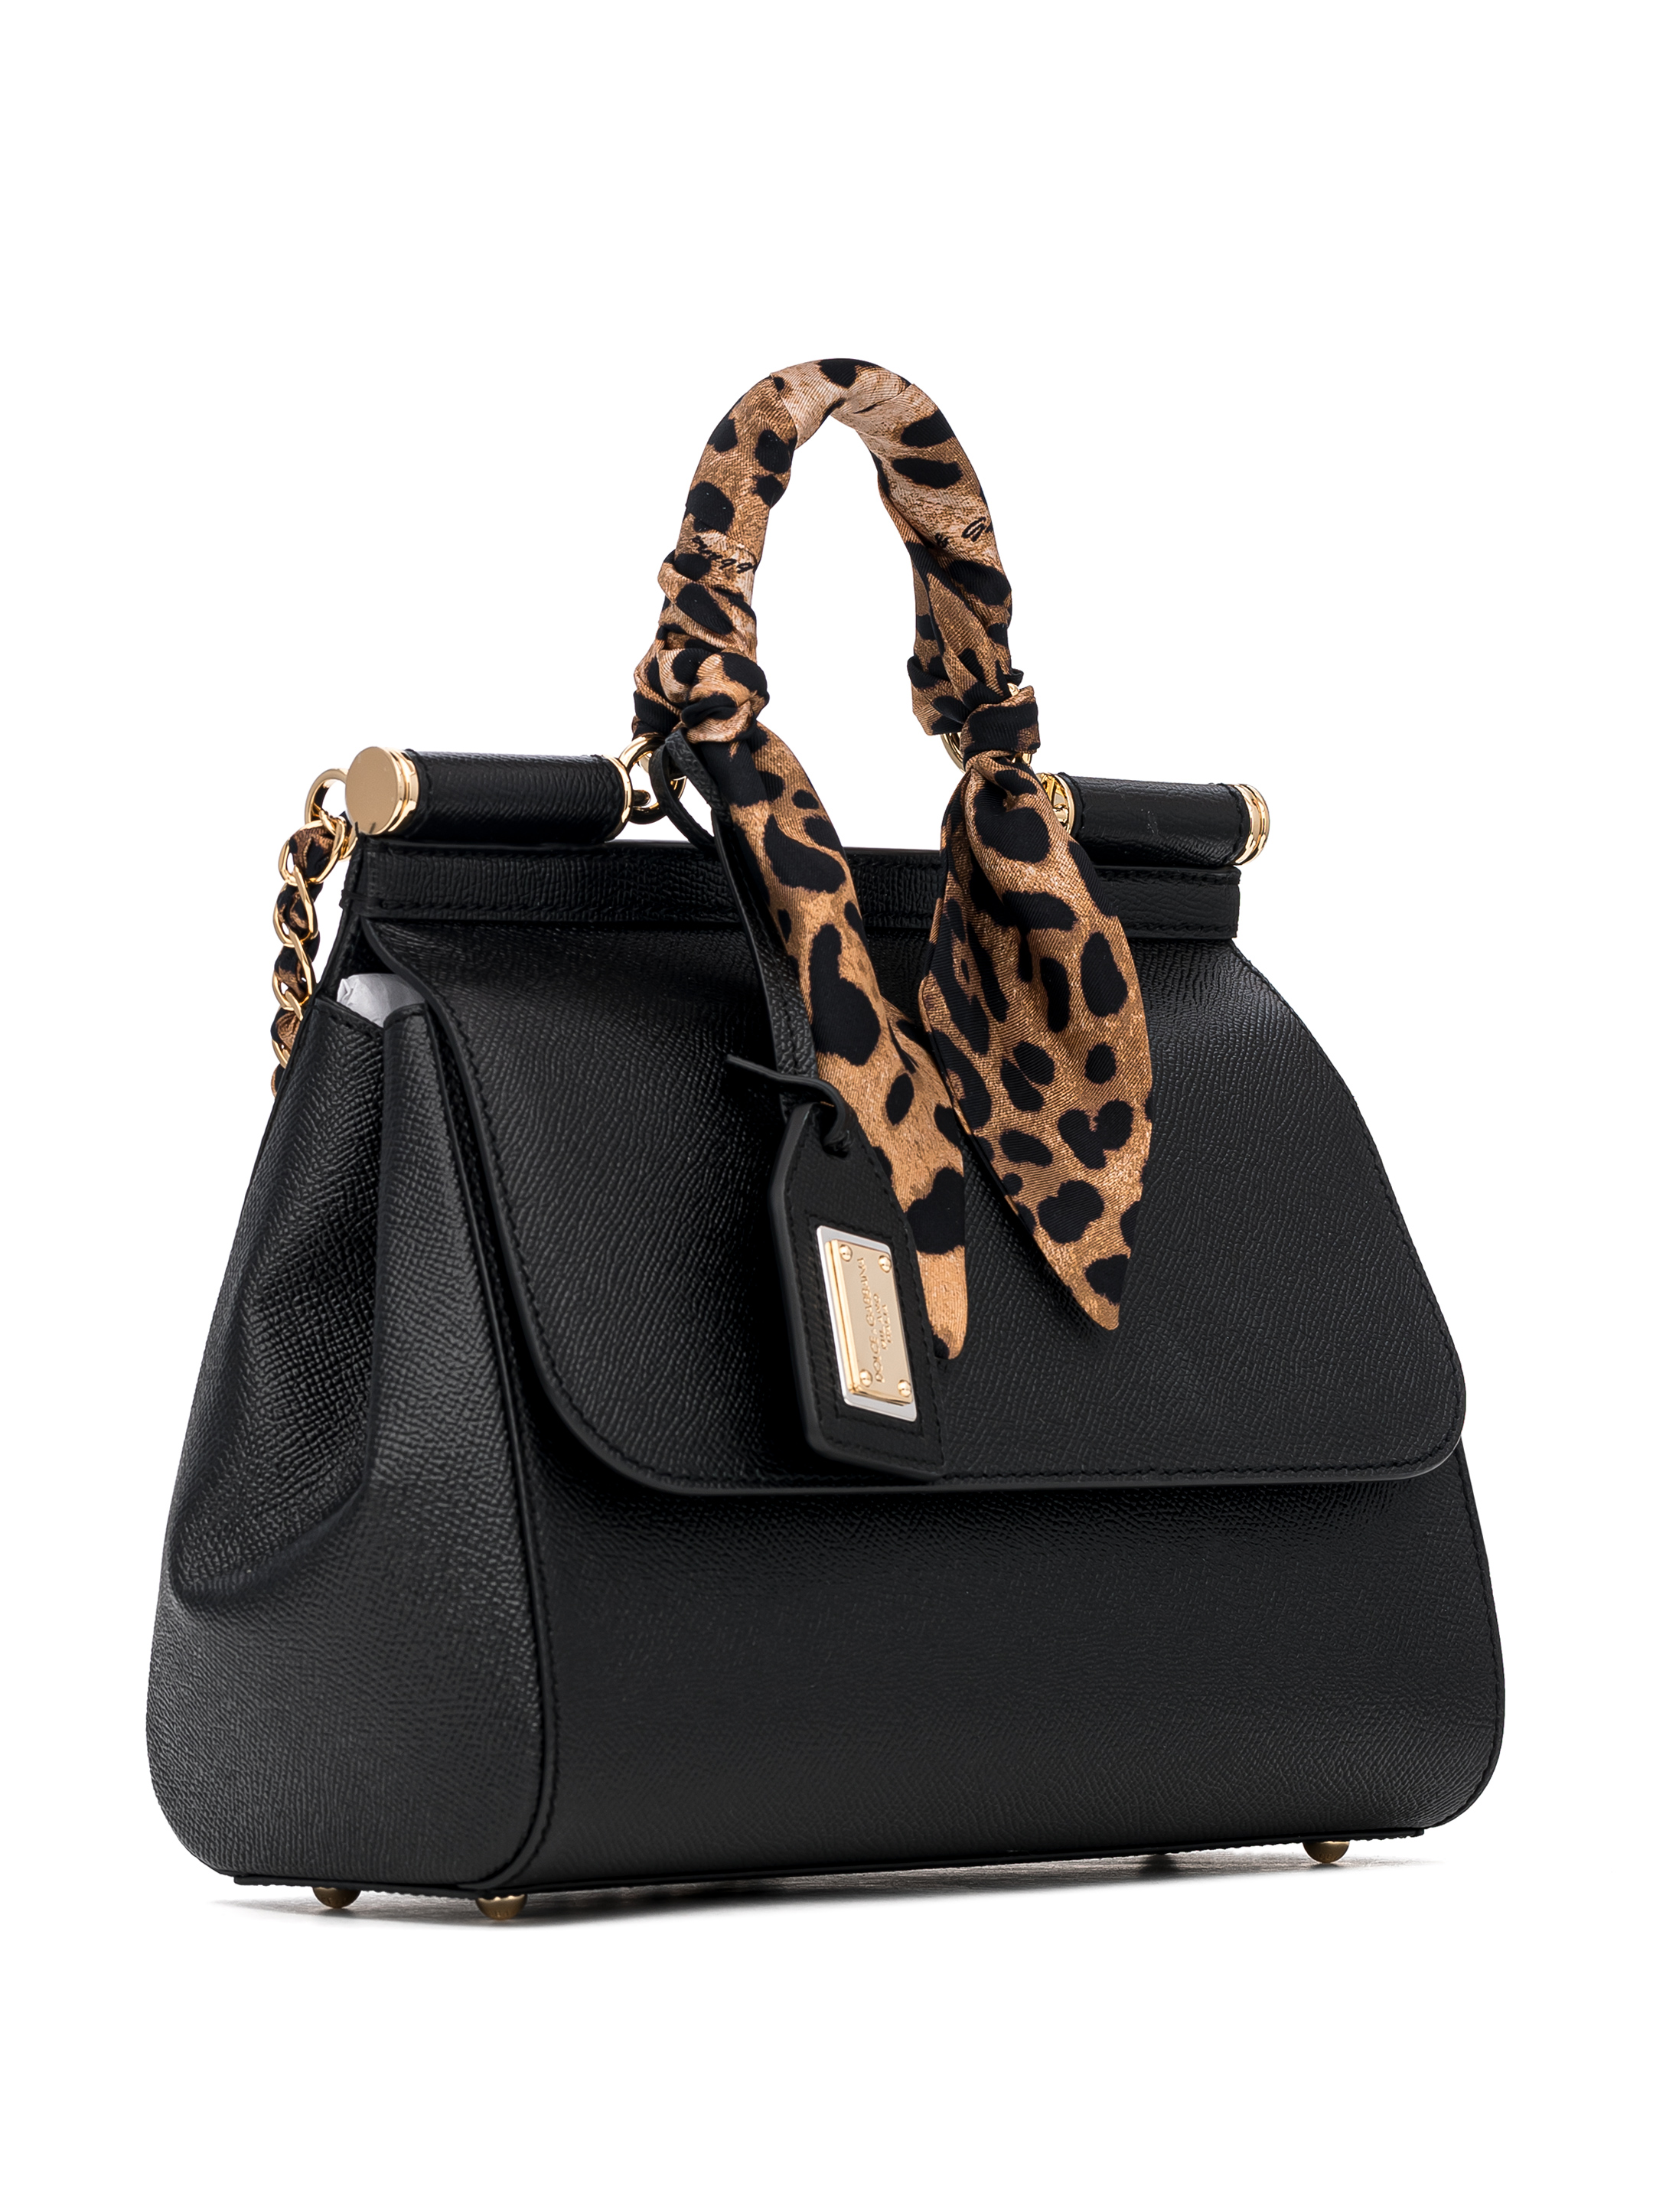 Totes bags Dolce & Gabbana - Sicily handbag in light mud color -  BB6003A100180045